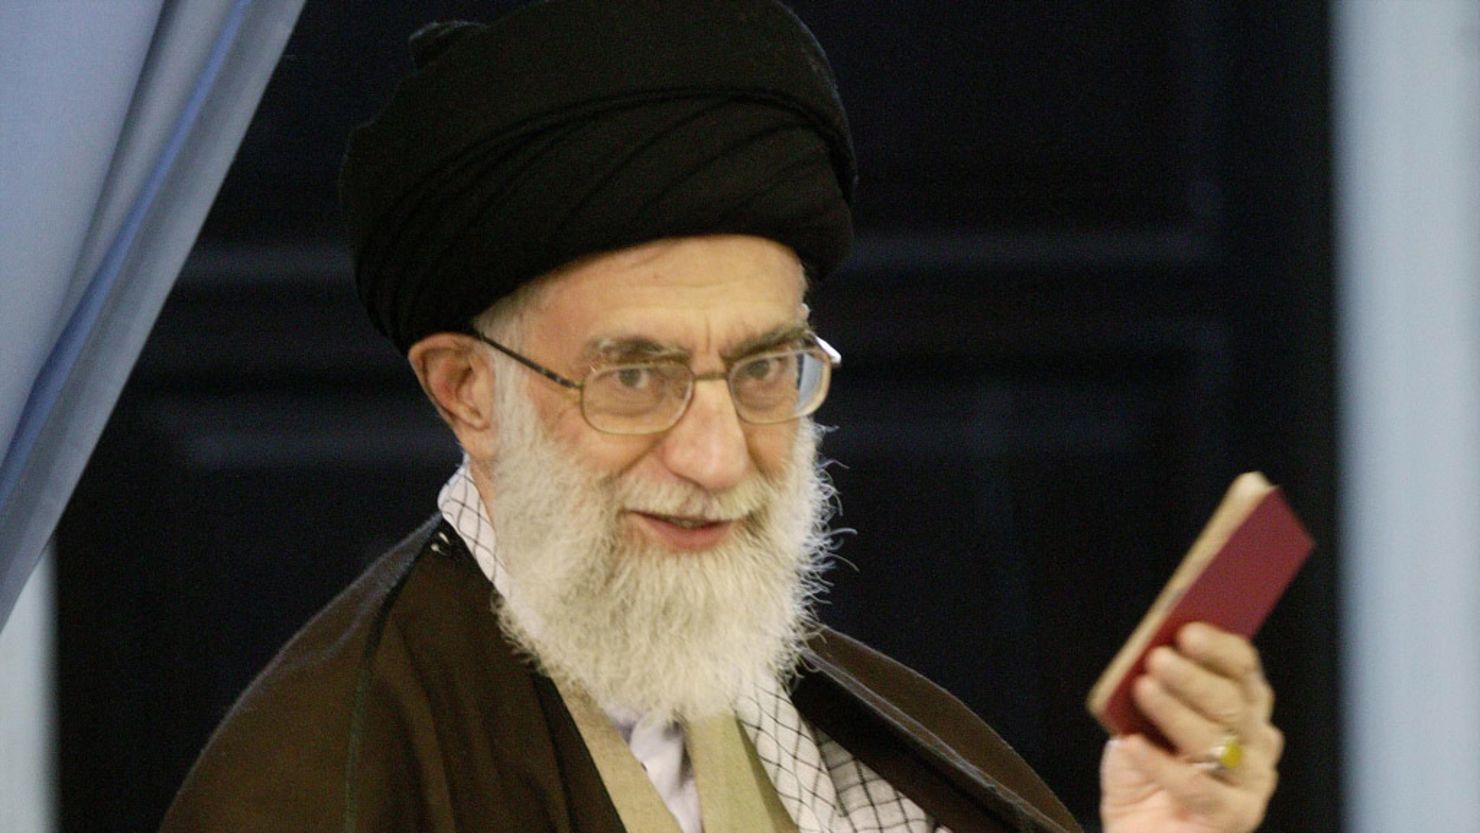 [File photo] Supreme Leader Ayatollah Ali Khamenei casts his ballot in Iran's parliamentary election on March 14, 2008, Tehran.